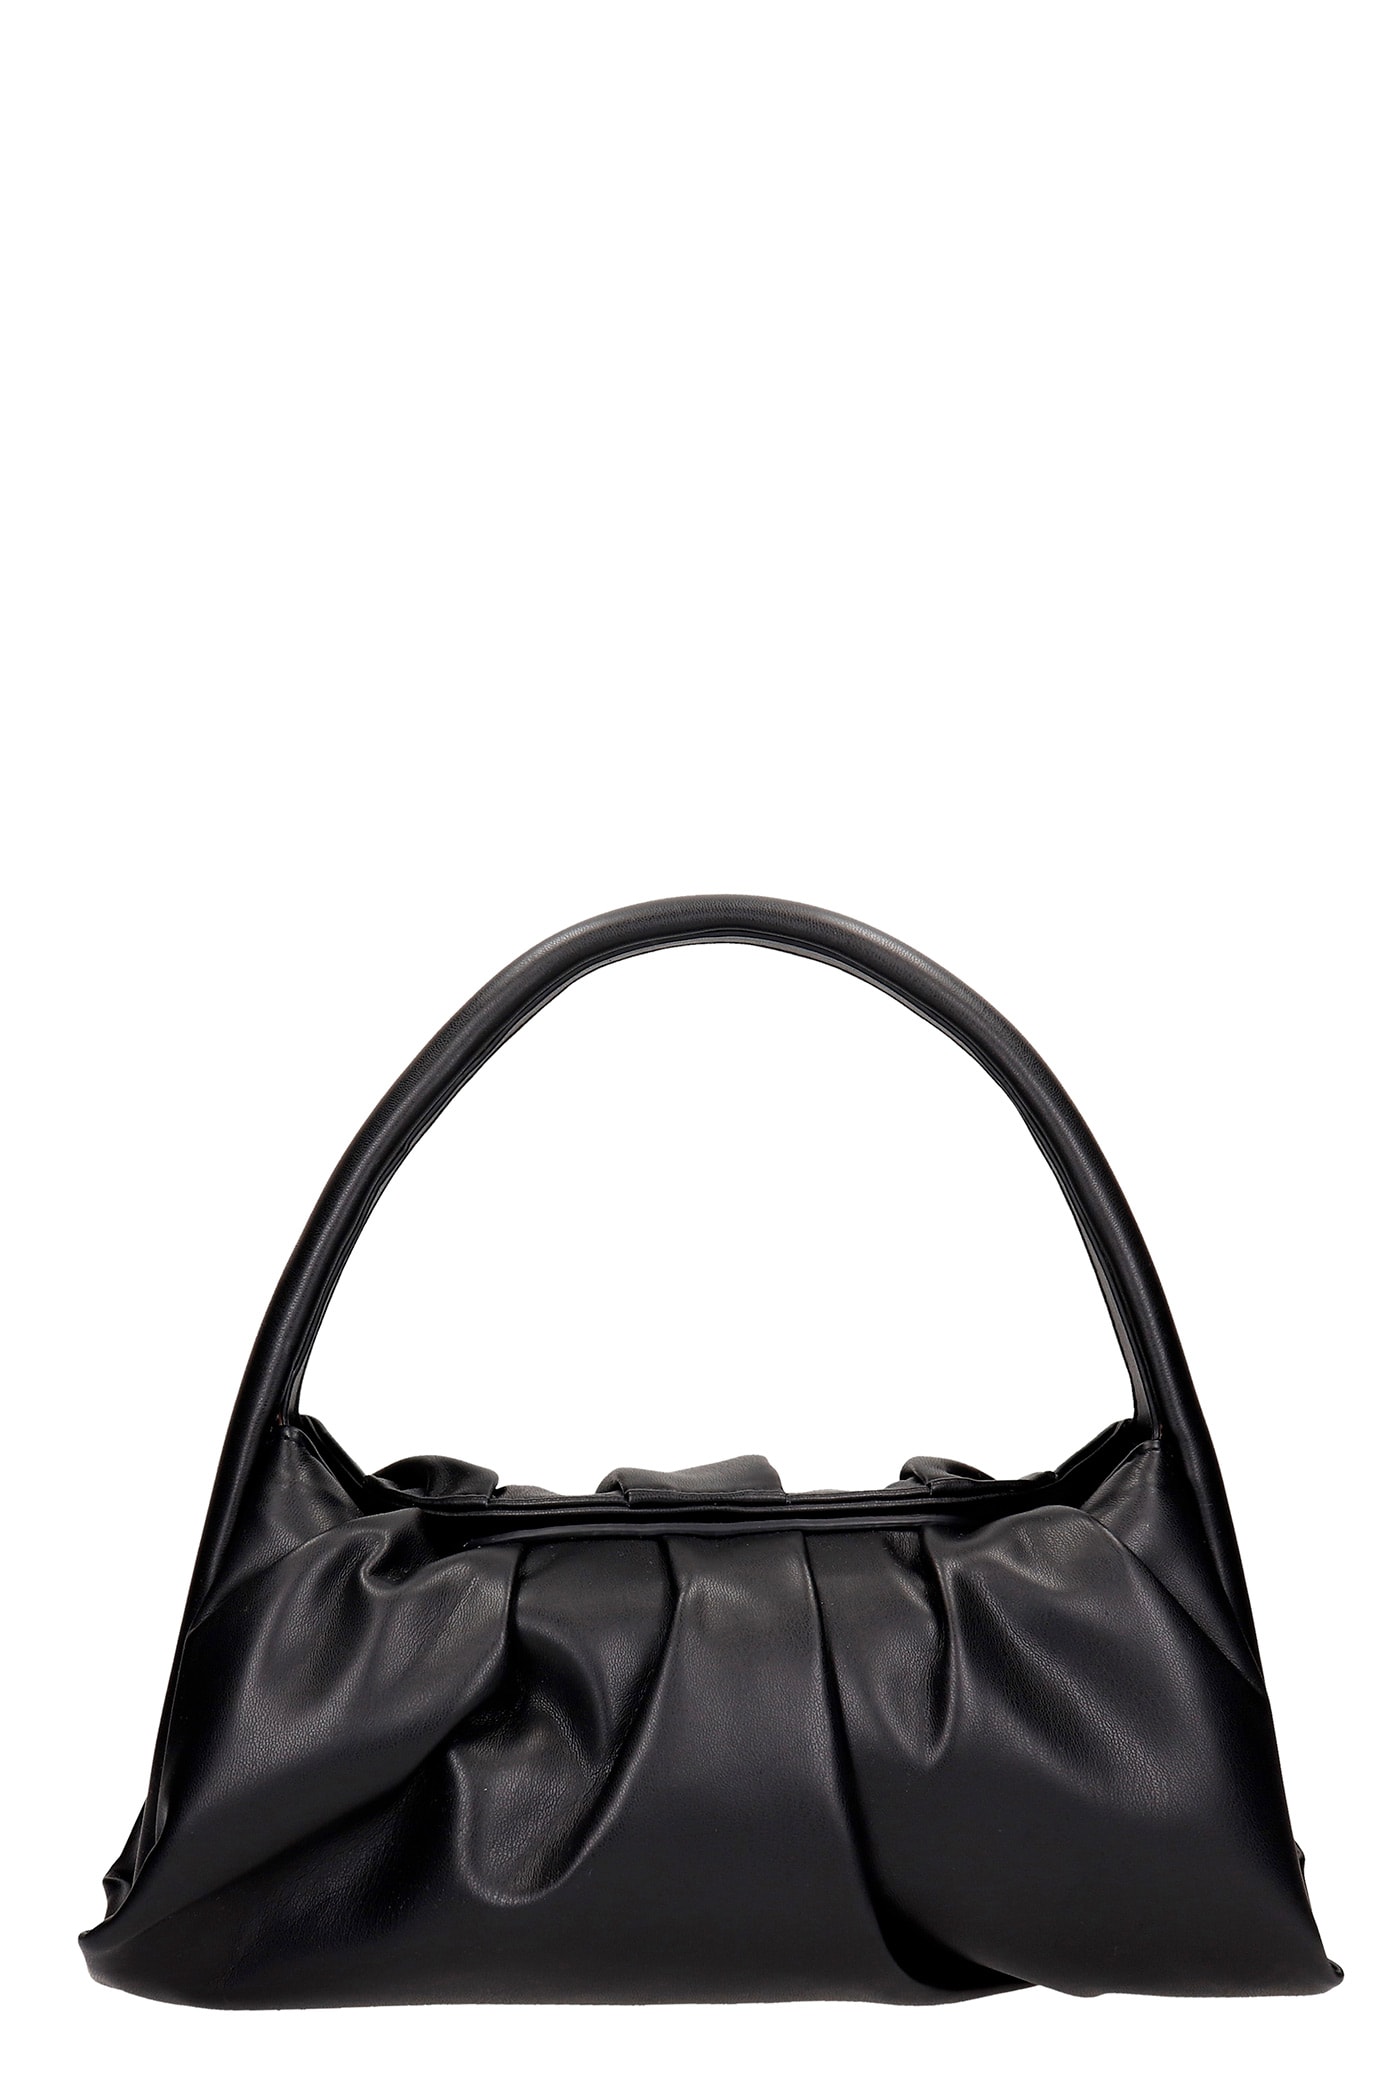 THEMOIRè Hera Basic Shoulder Bag In Black Leather